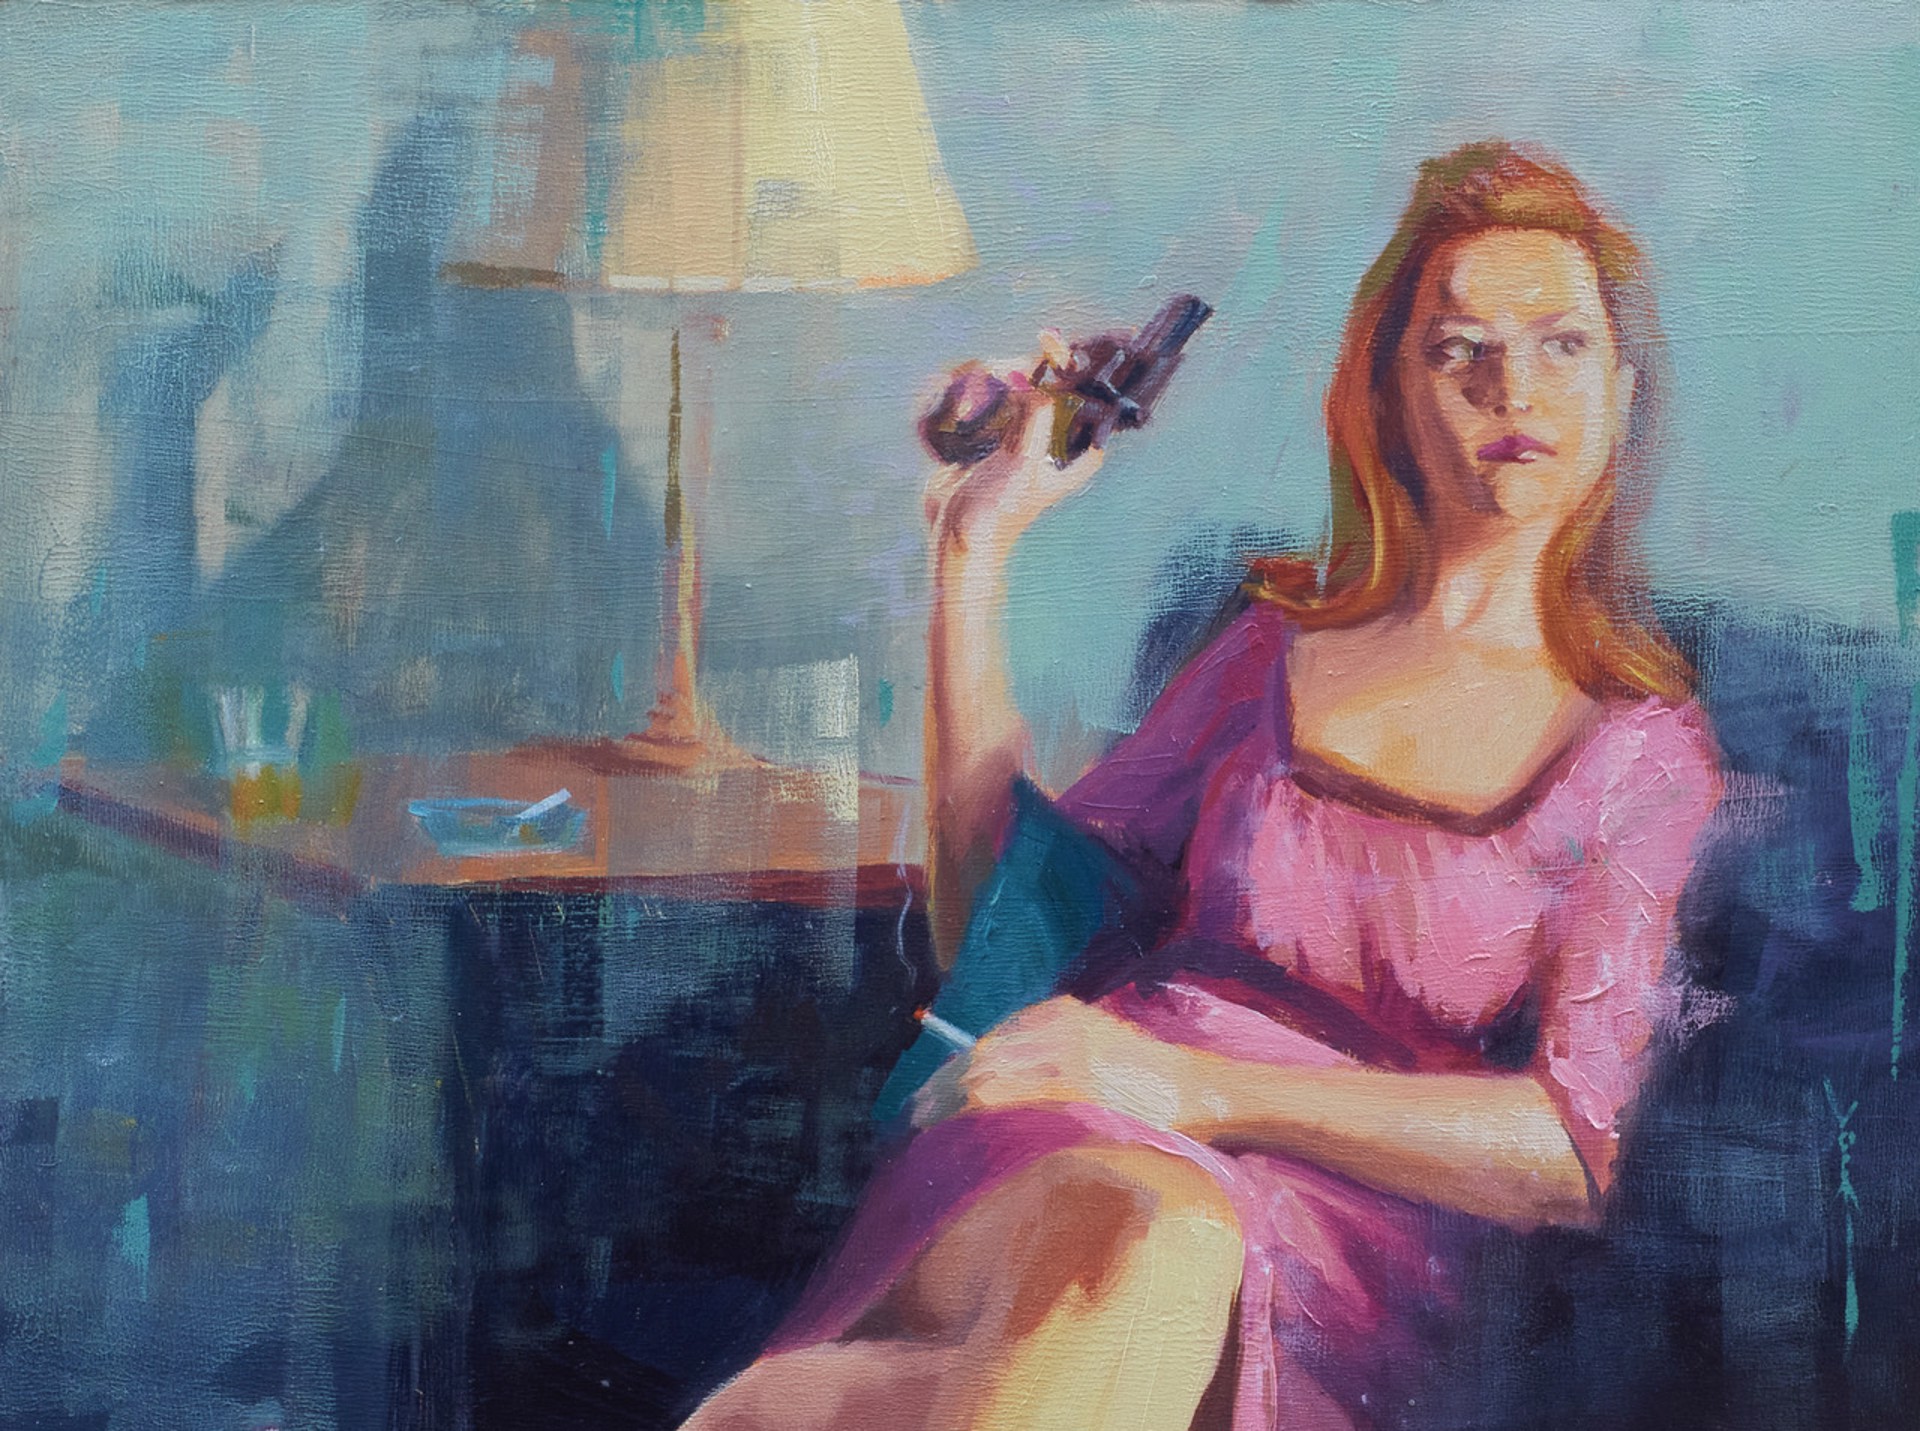 Woman with a Vengence by Doug Clarke